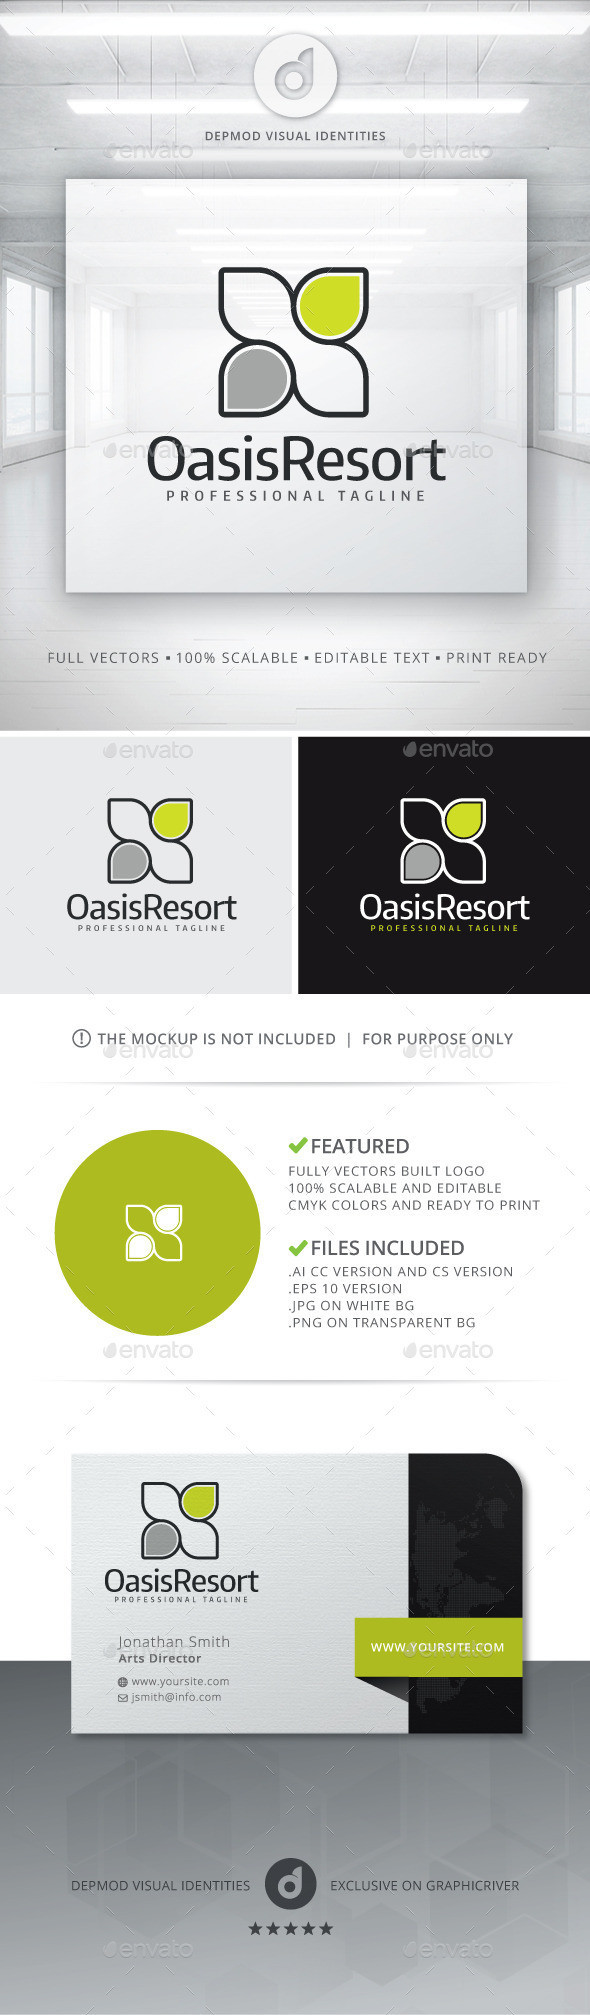 Oasis resort logo